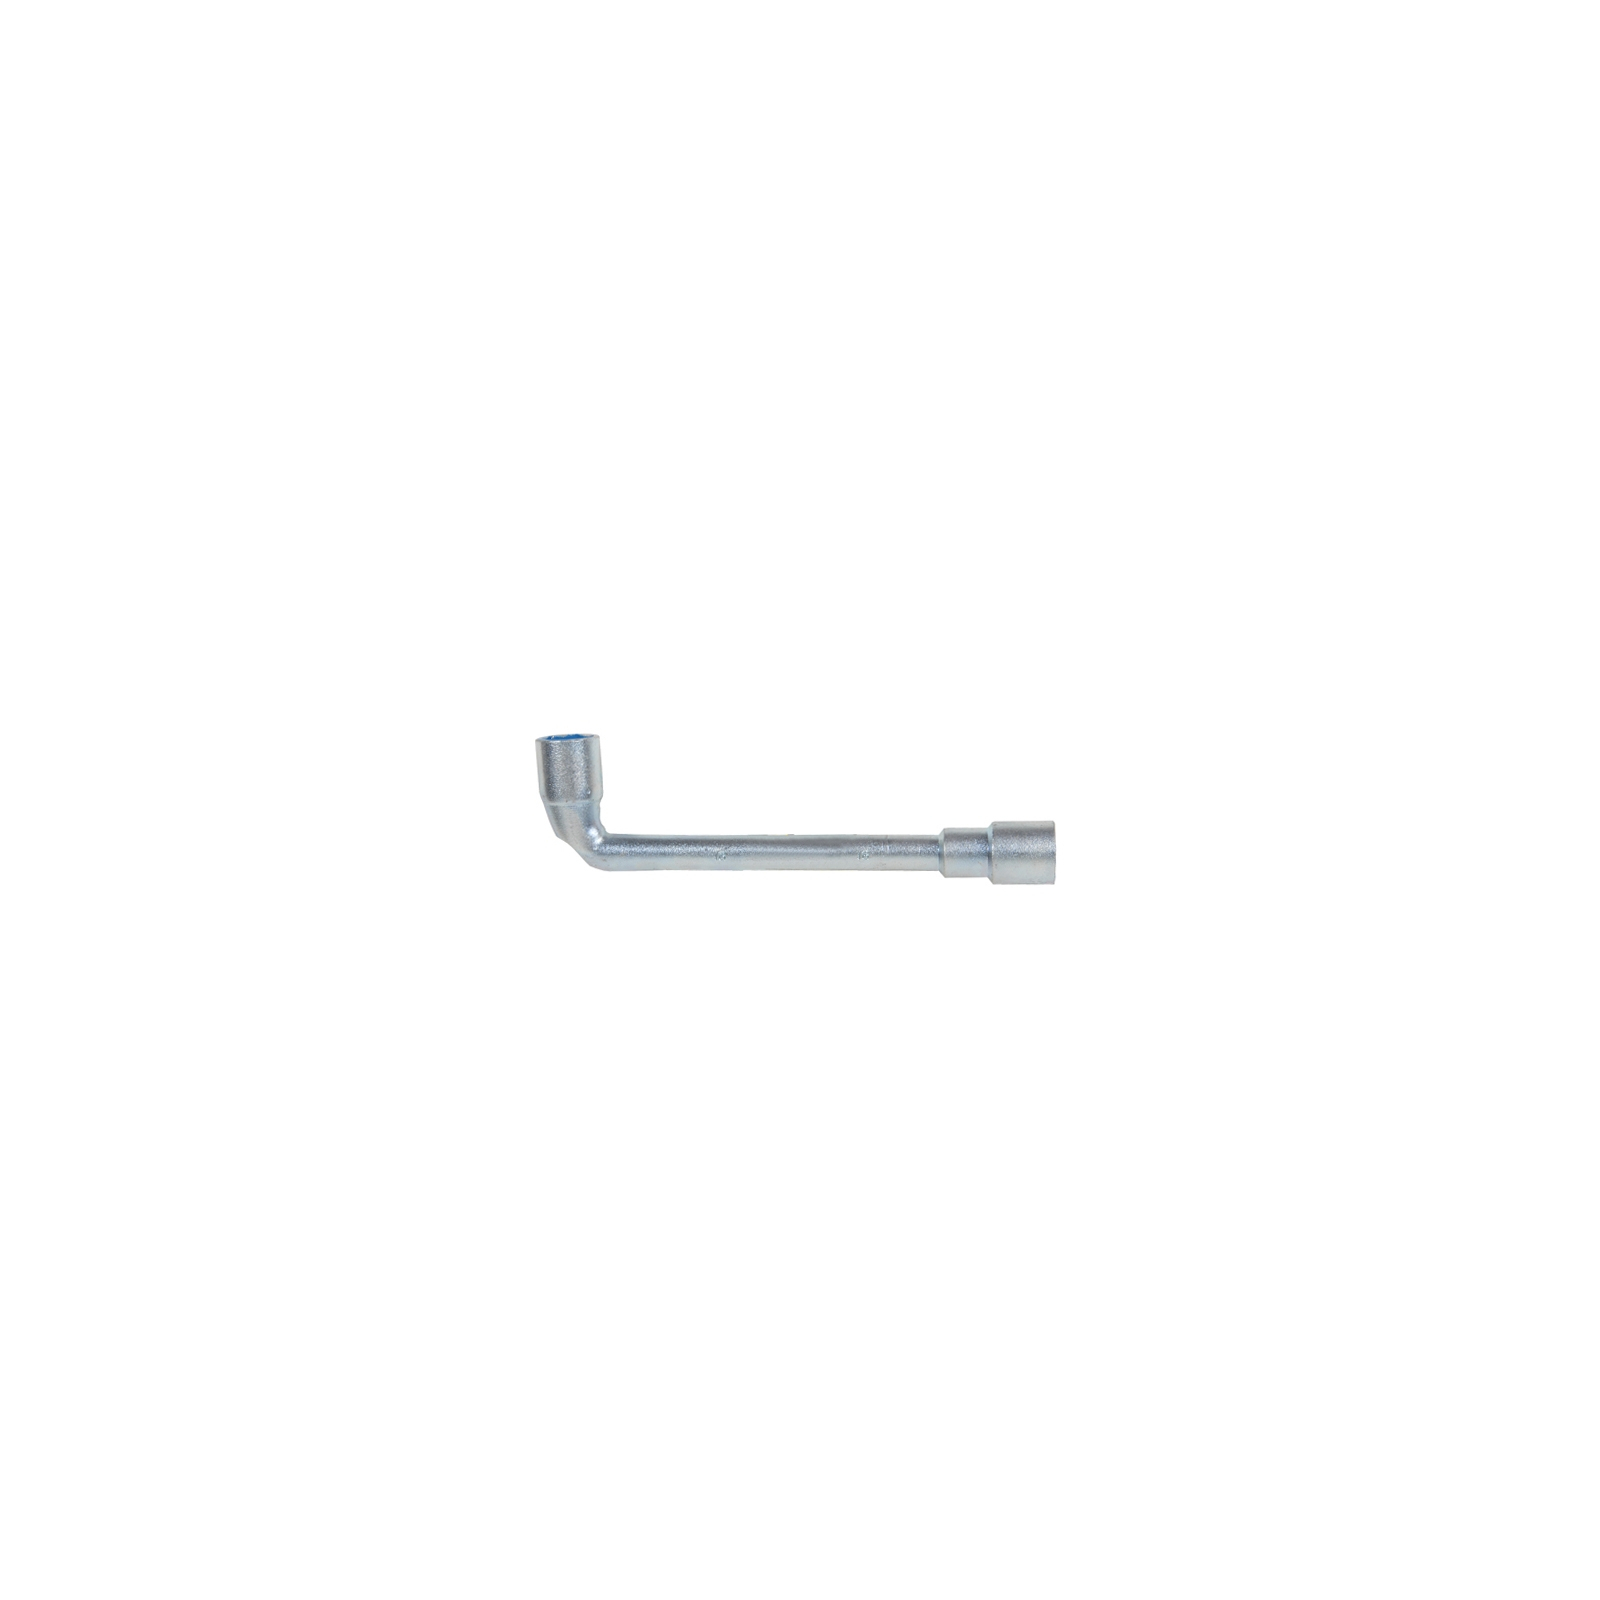 Ключ Sigma файковый 15мм (6027151)